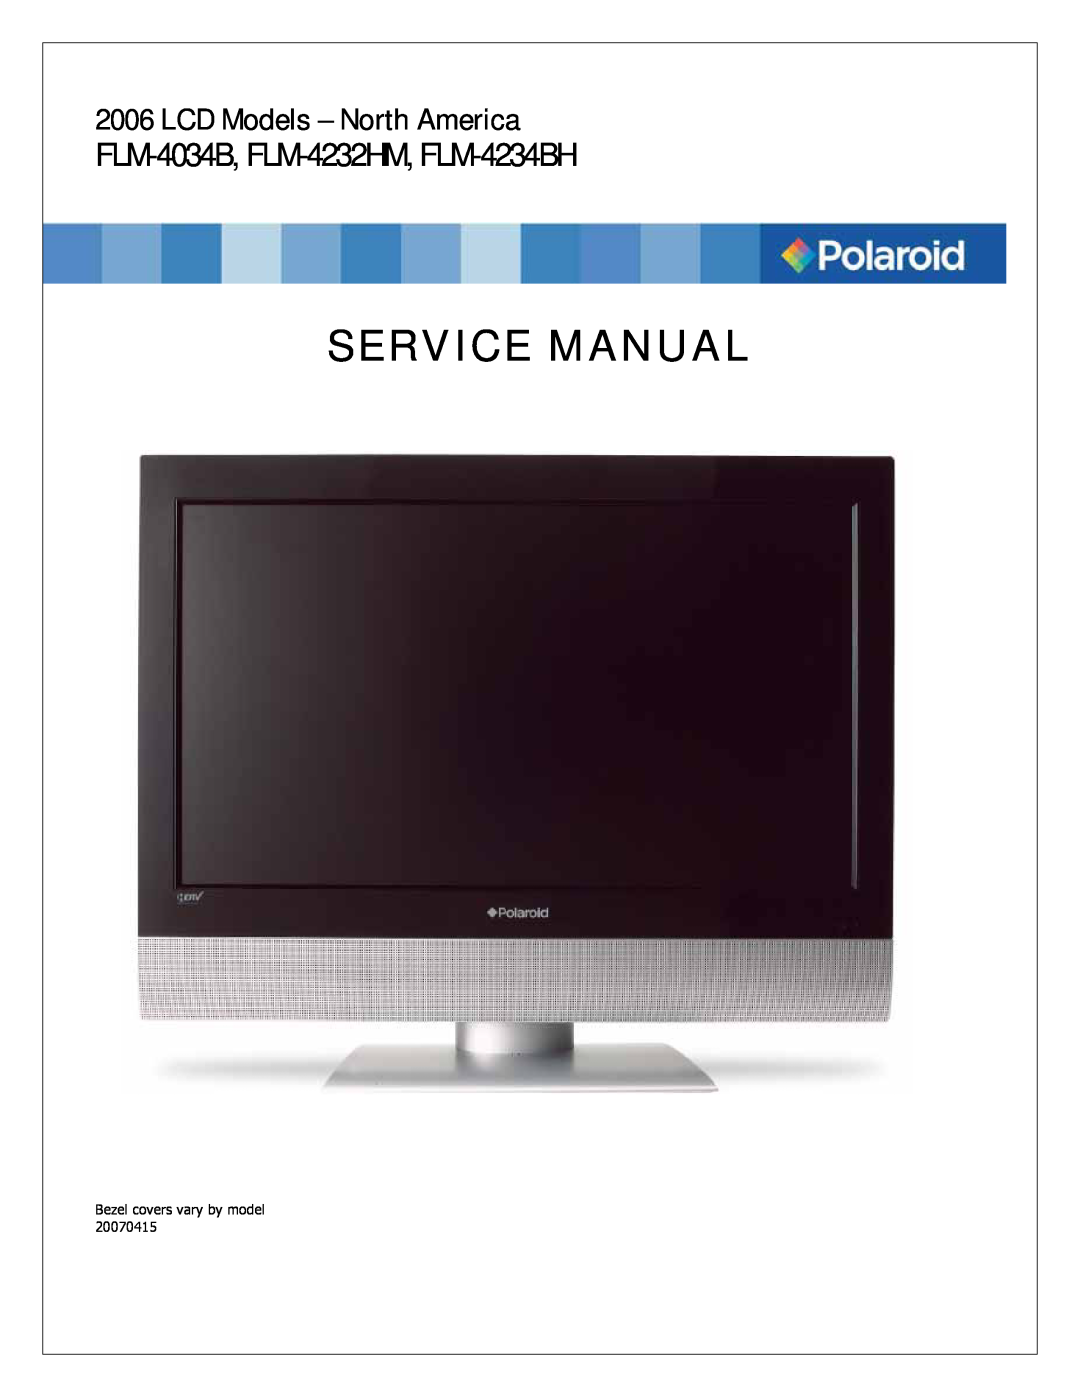 Polaroid service manual LCD Models - North America, Service Manual, FLM-4034B, FLM-4232HM, FLM-4234BH 